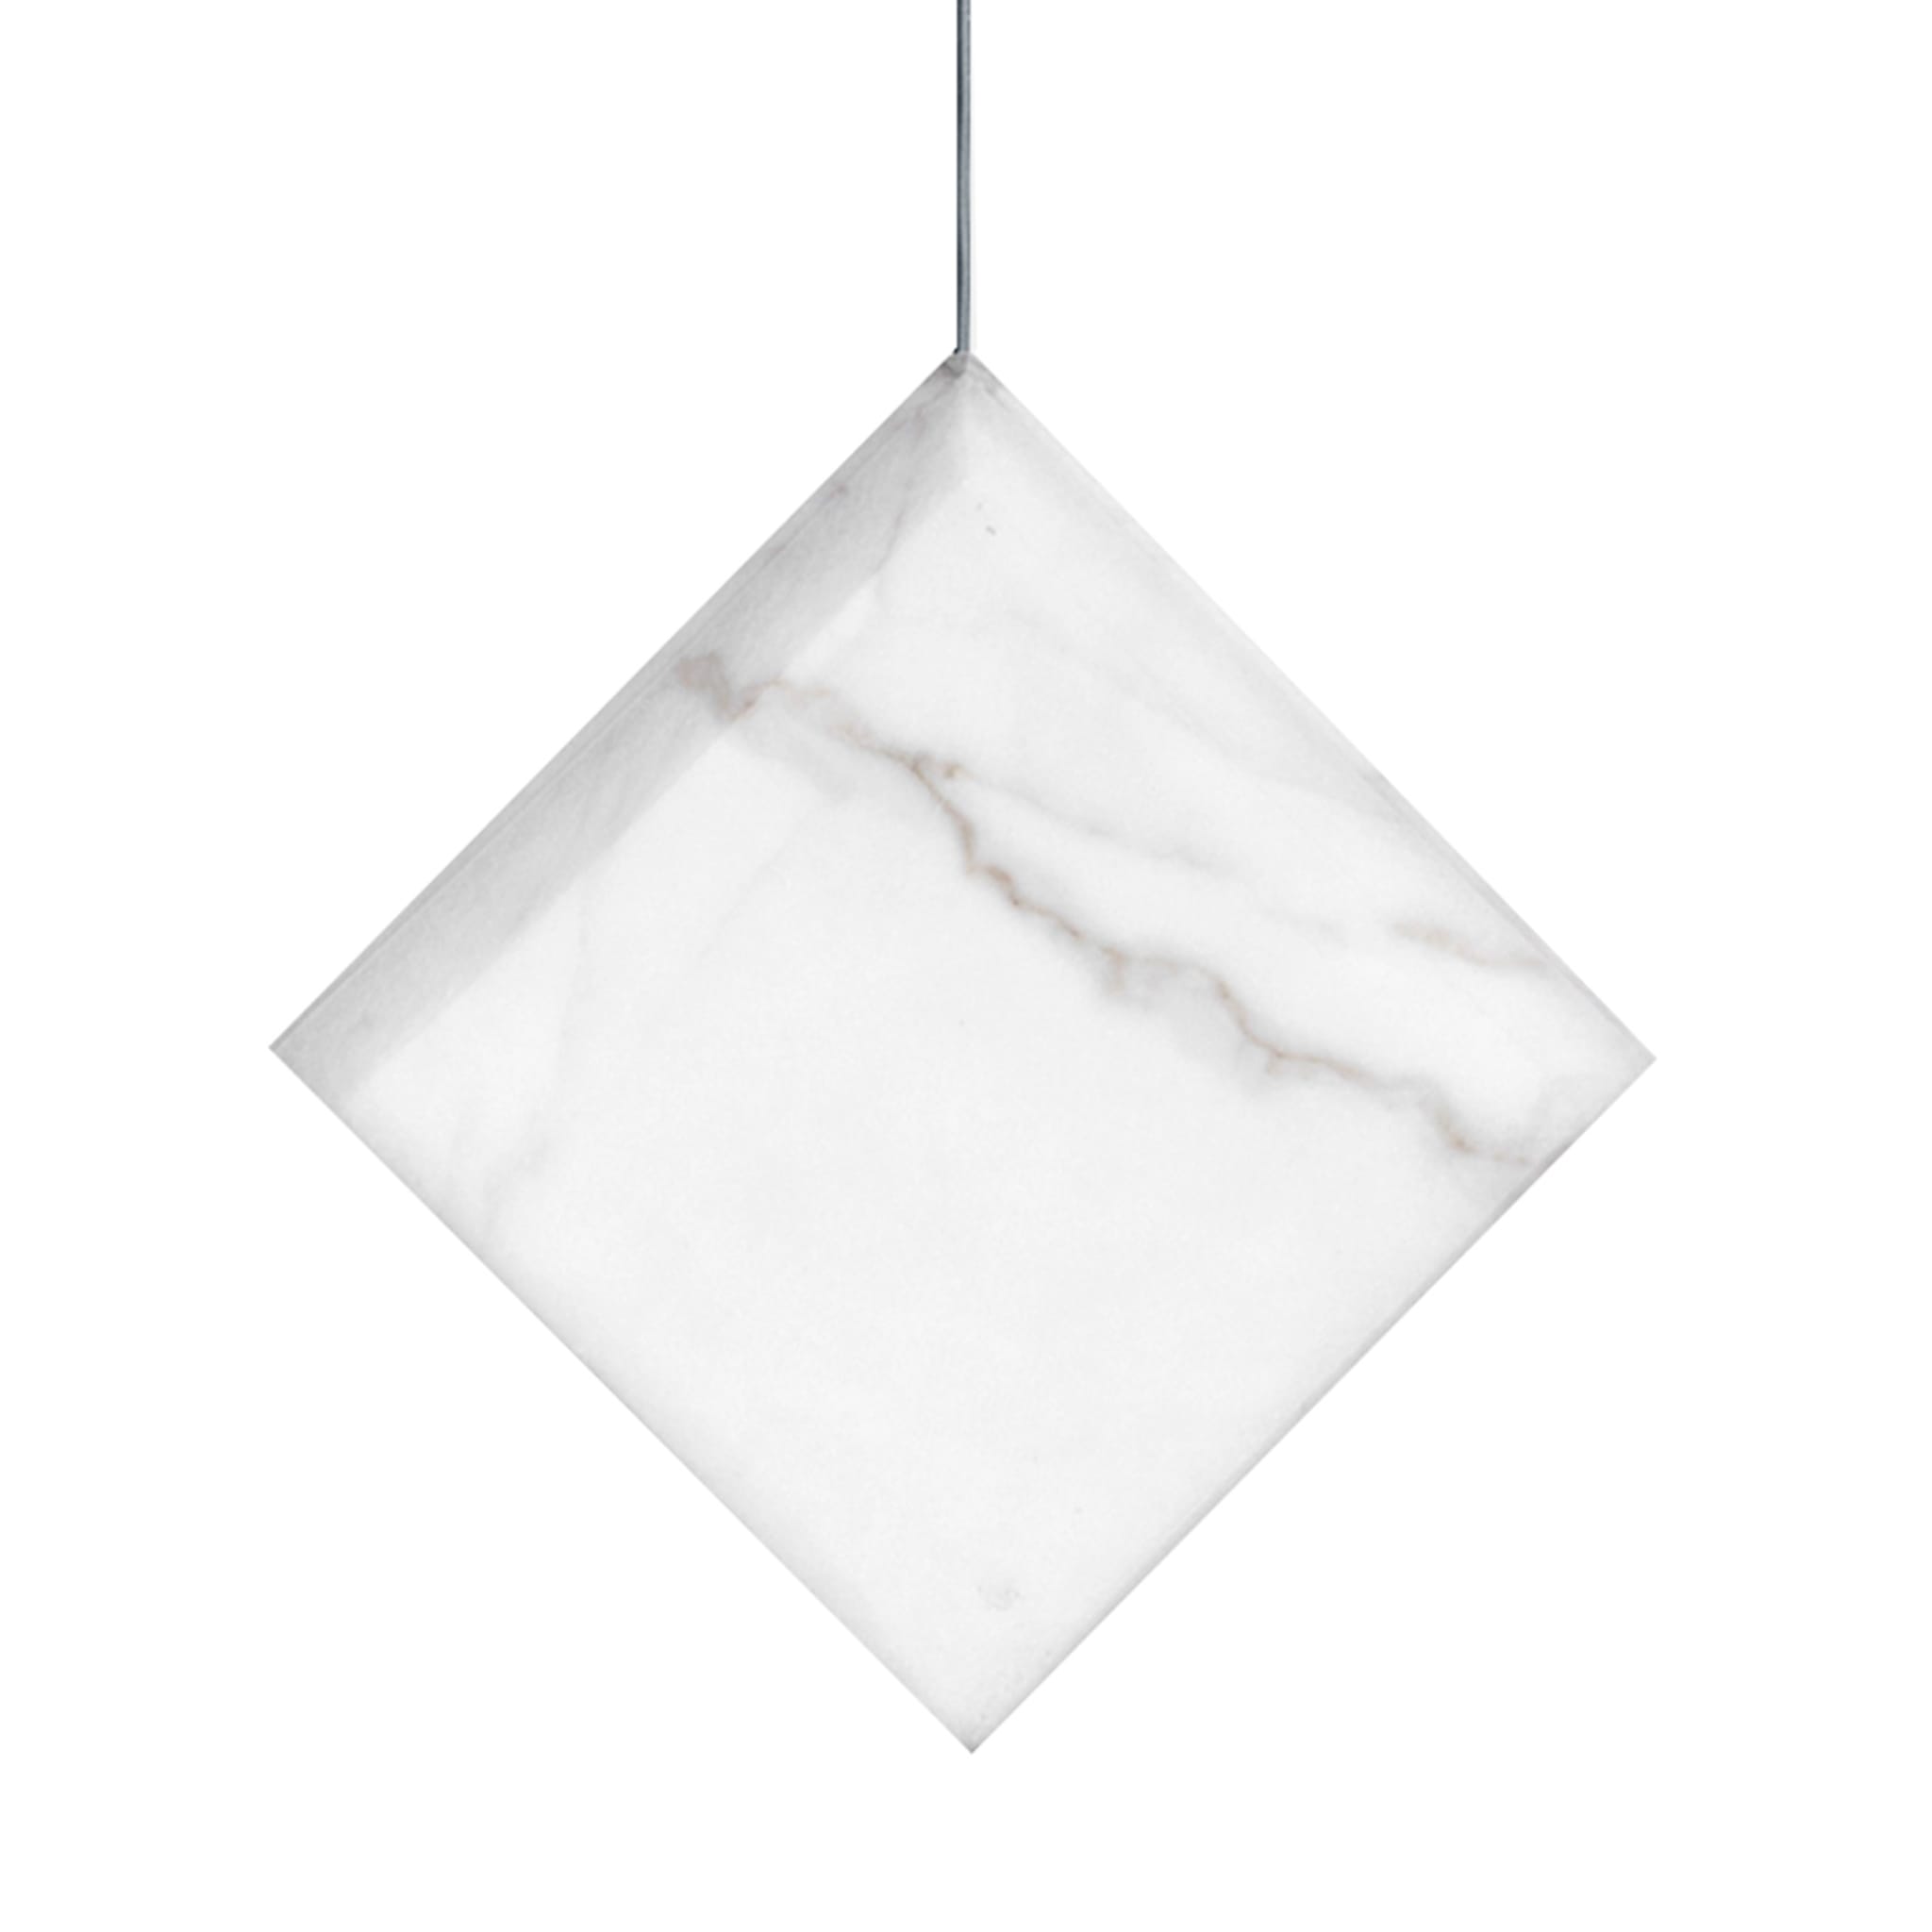 Werner Jr. Carrara Marble Pendant lamp #1 - Alternative view 1